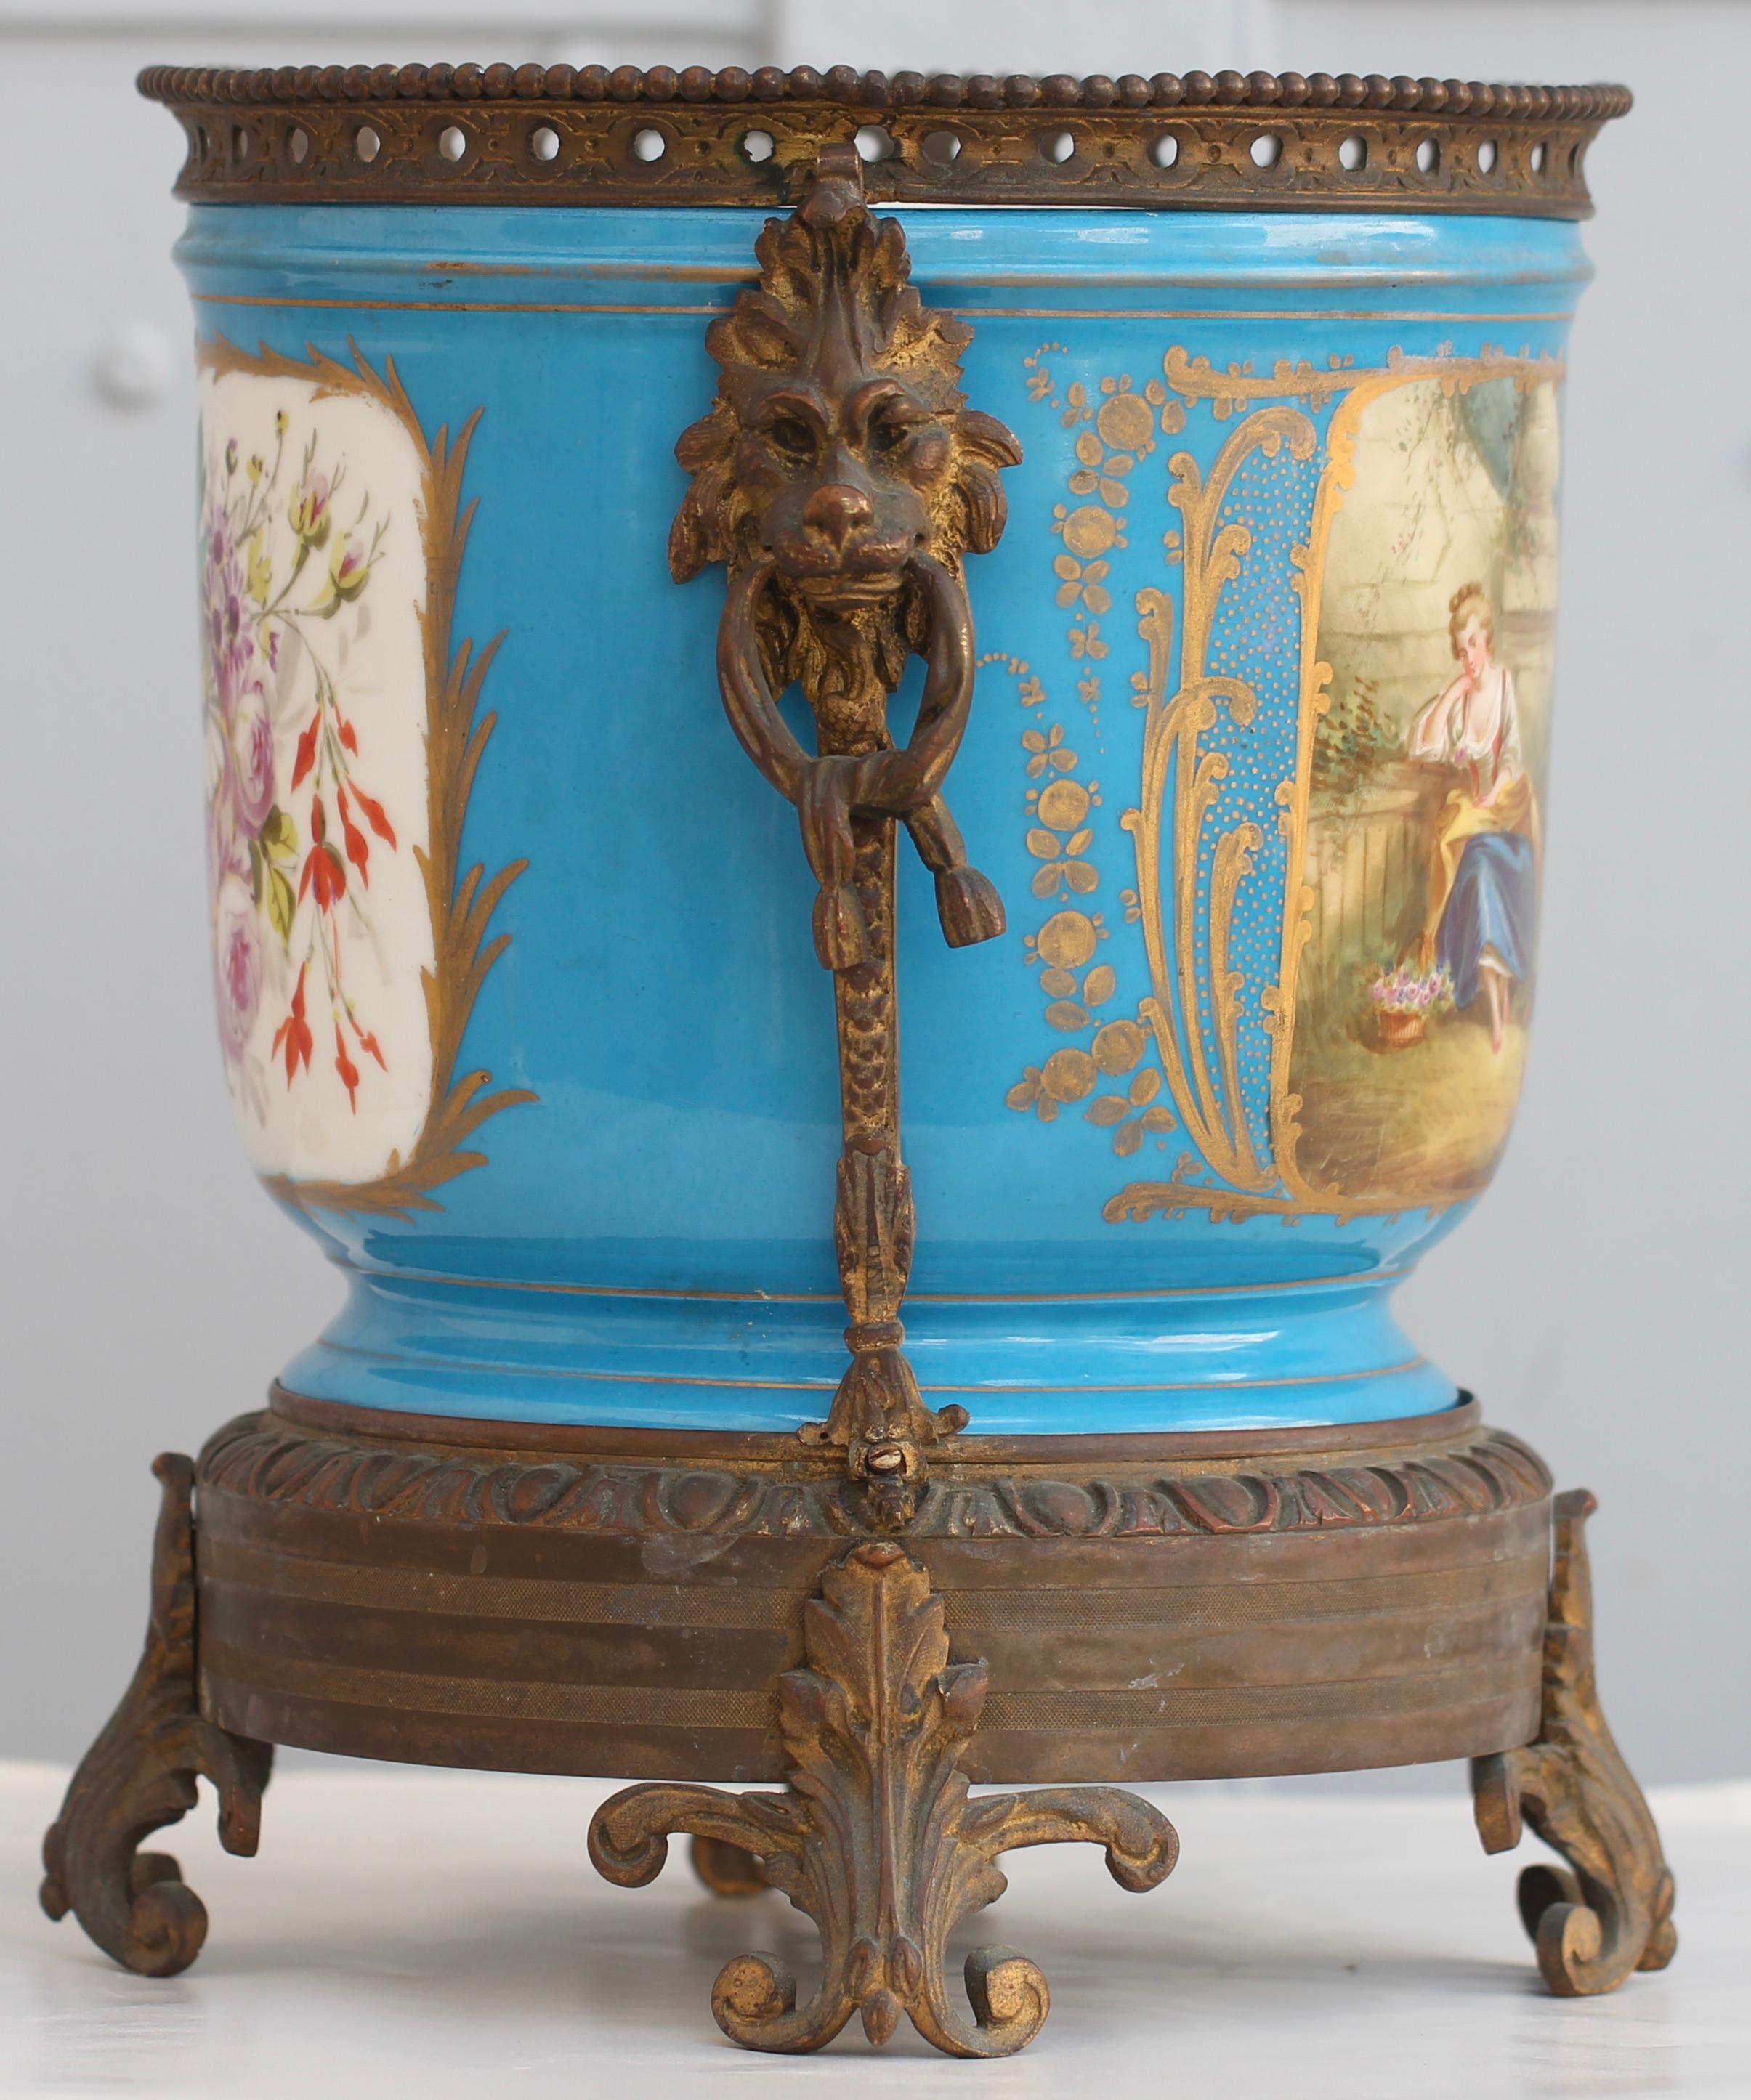 Hand-Painted 19th Century Louis XVI Style Ormolu-Mounted Sèvres Porcelain Cachepot